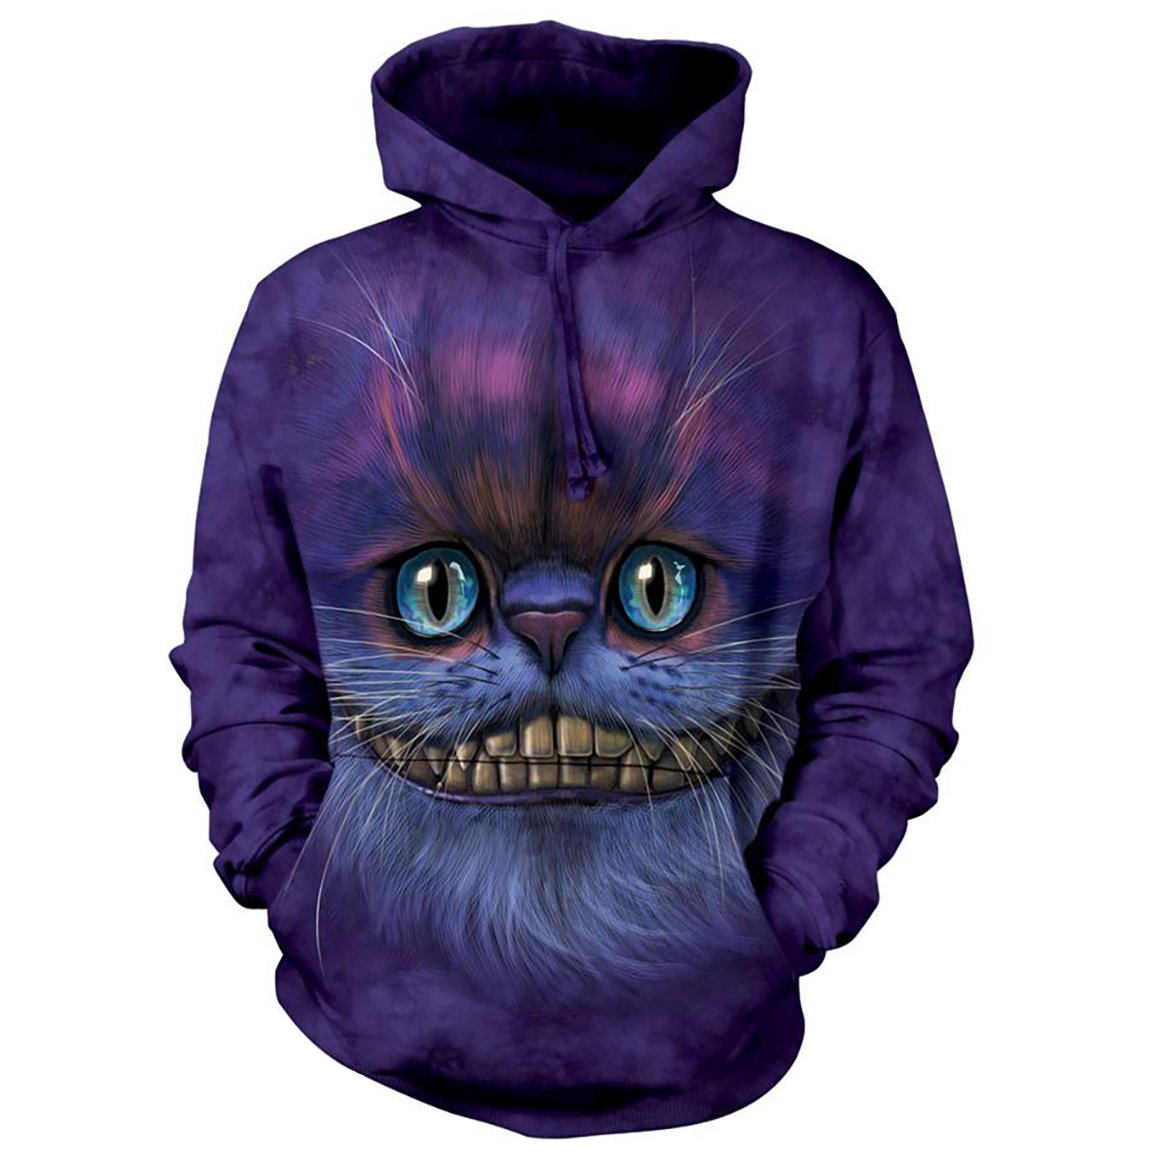 Big Face Cheshire Cat - Adult Unisex Hoodie Sweatshirt